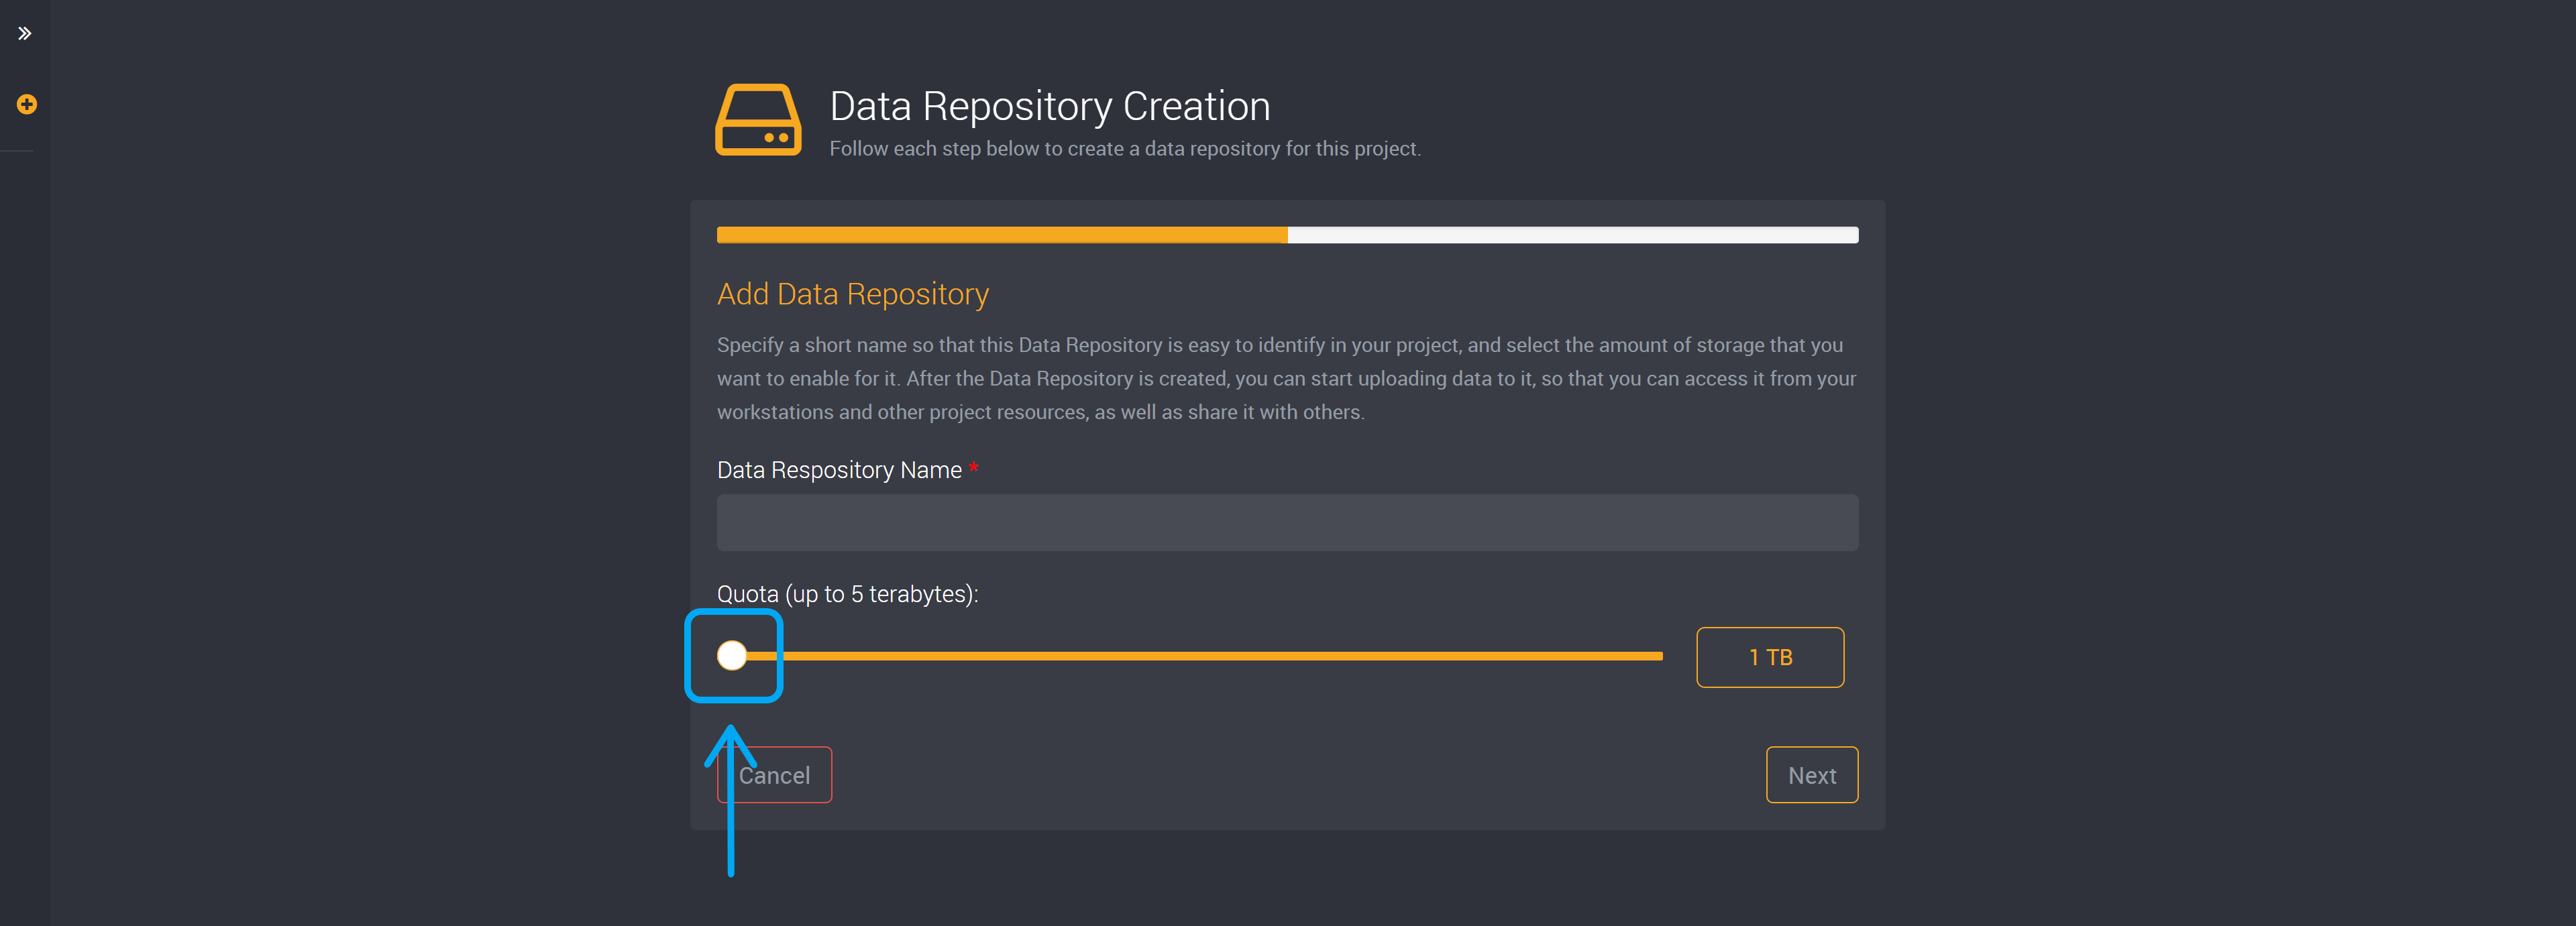 Quota of data repository